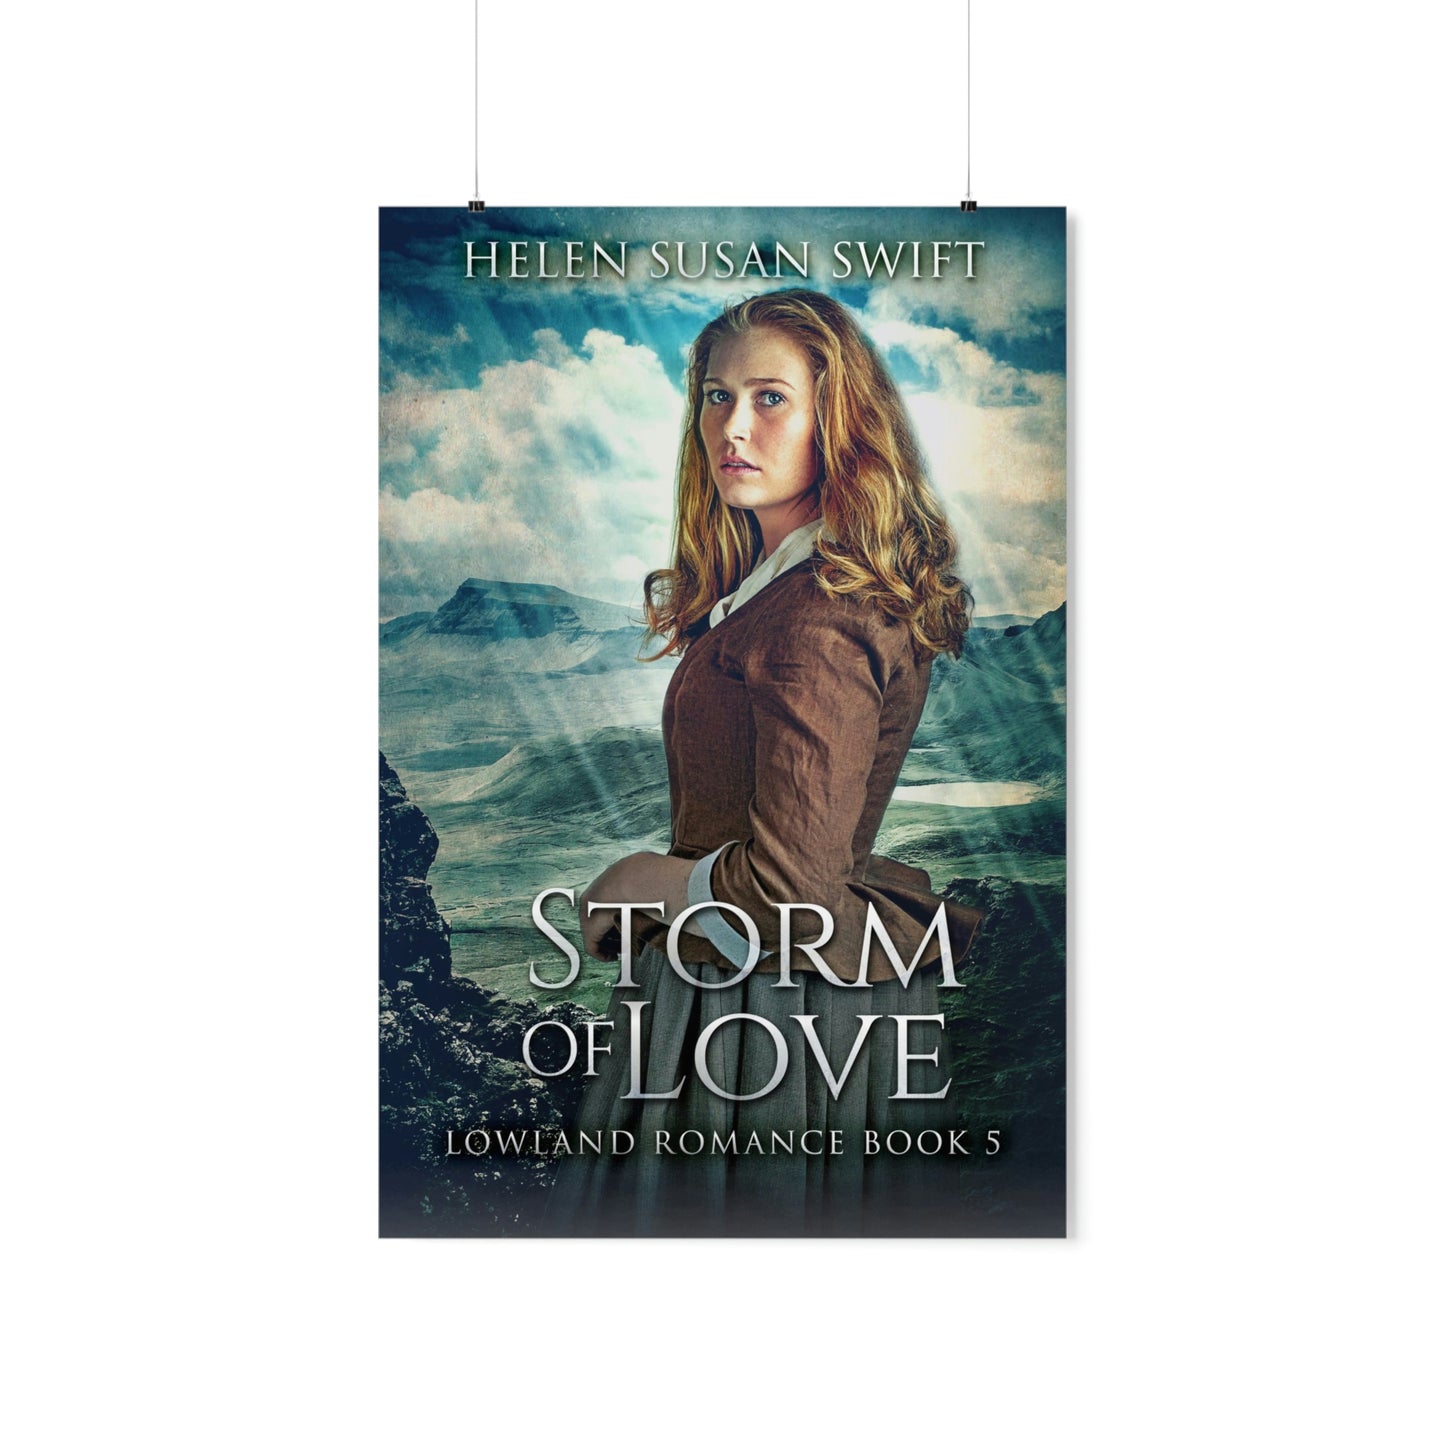 Storm Of Love - Matte Poster